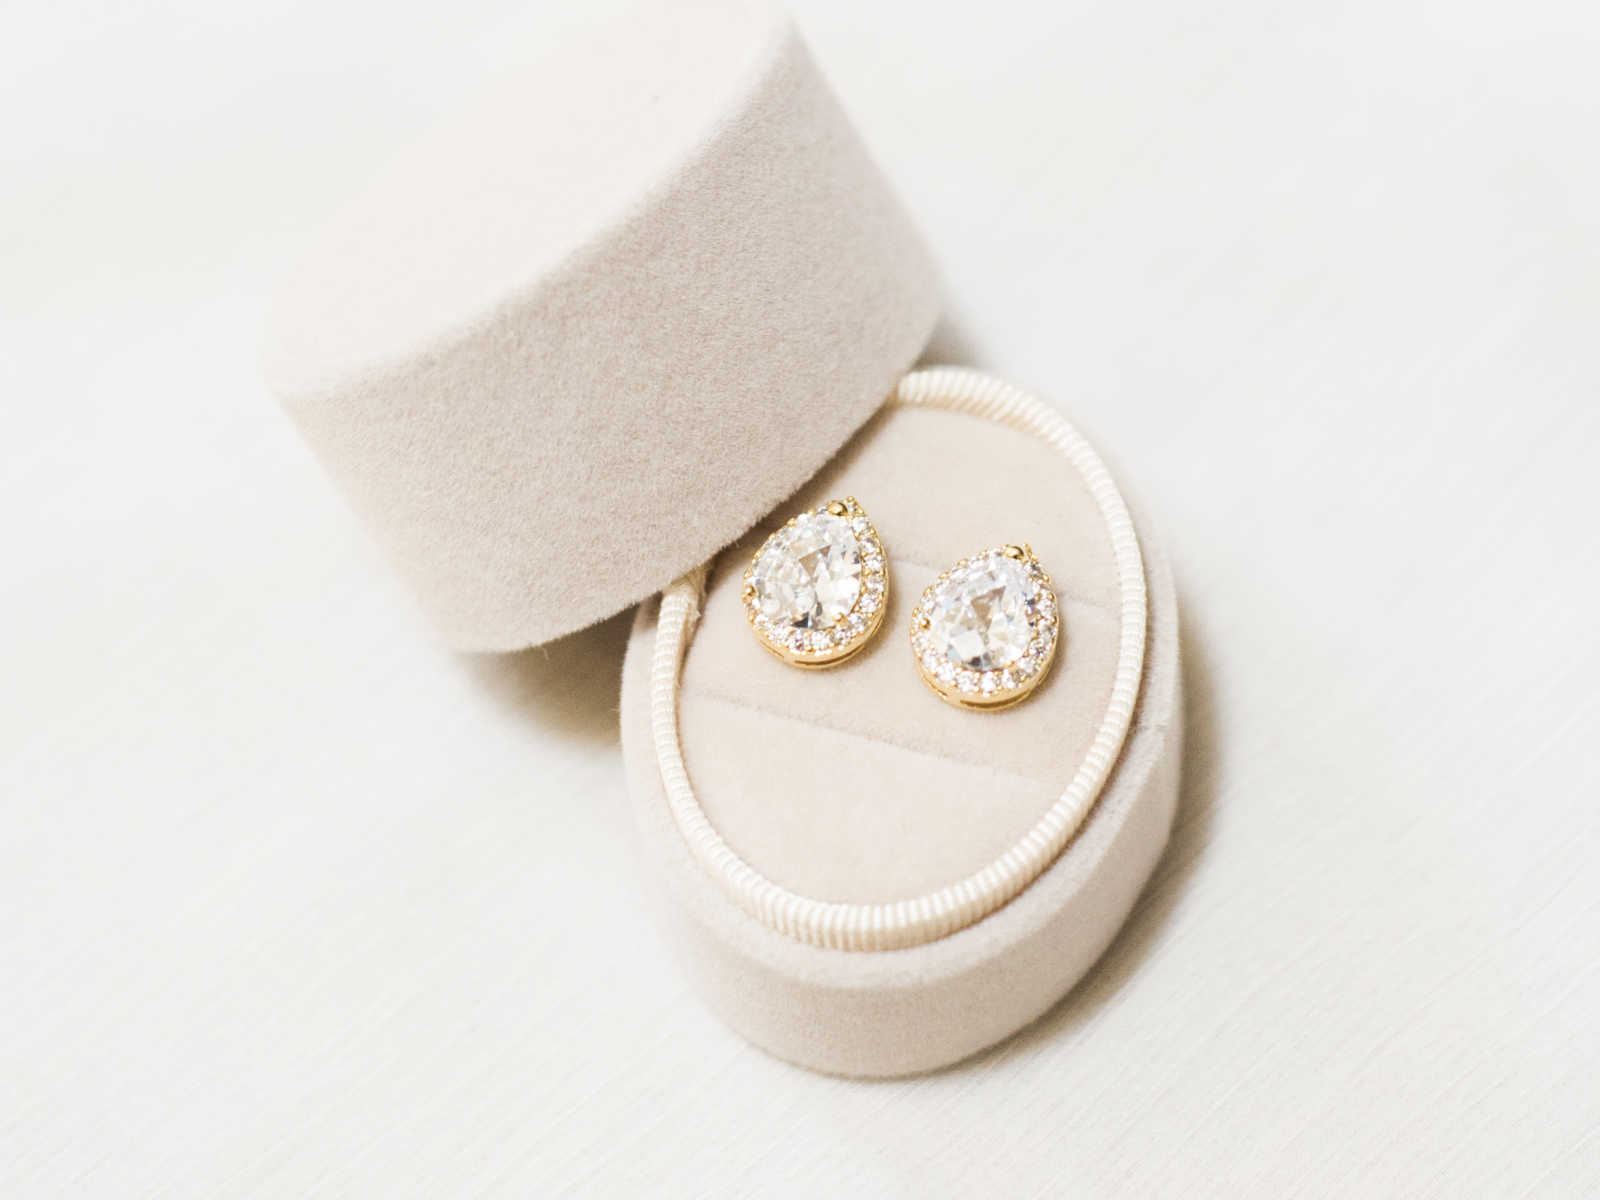 jewelry case opened displaying pear shaped diamond earrings